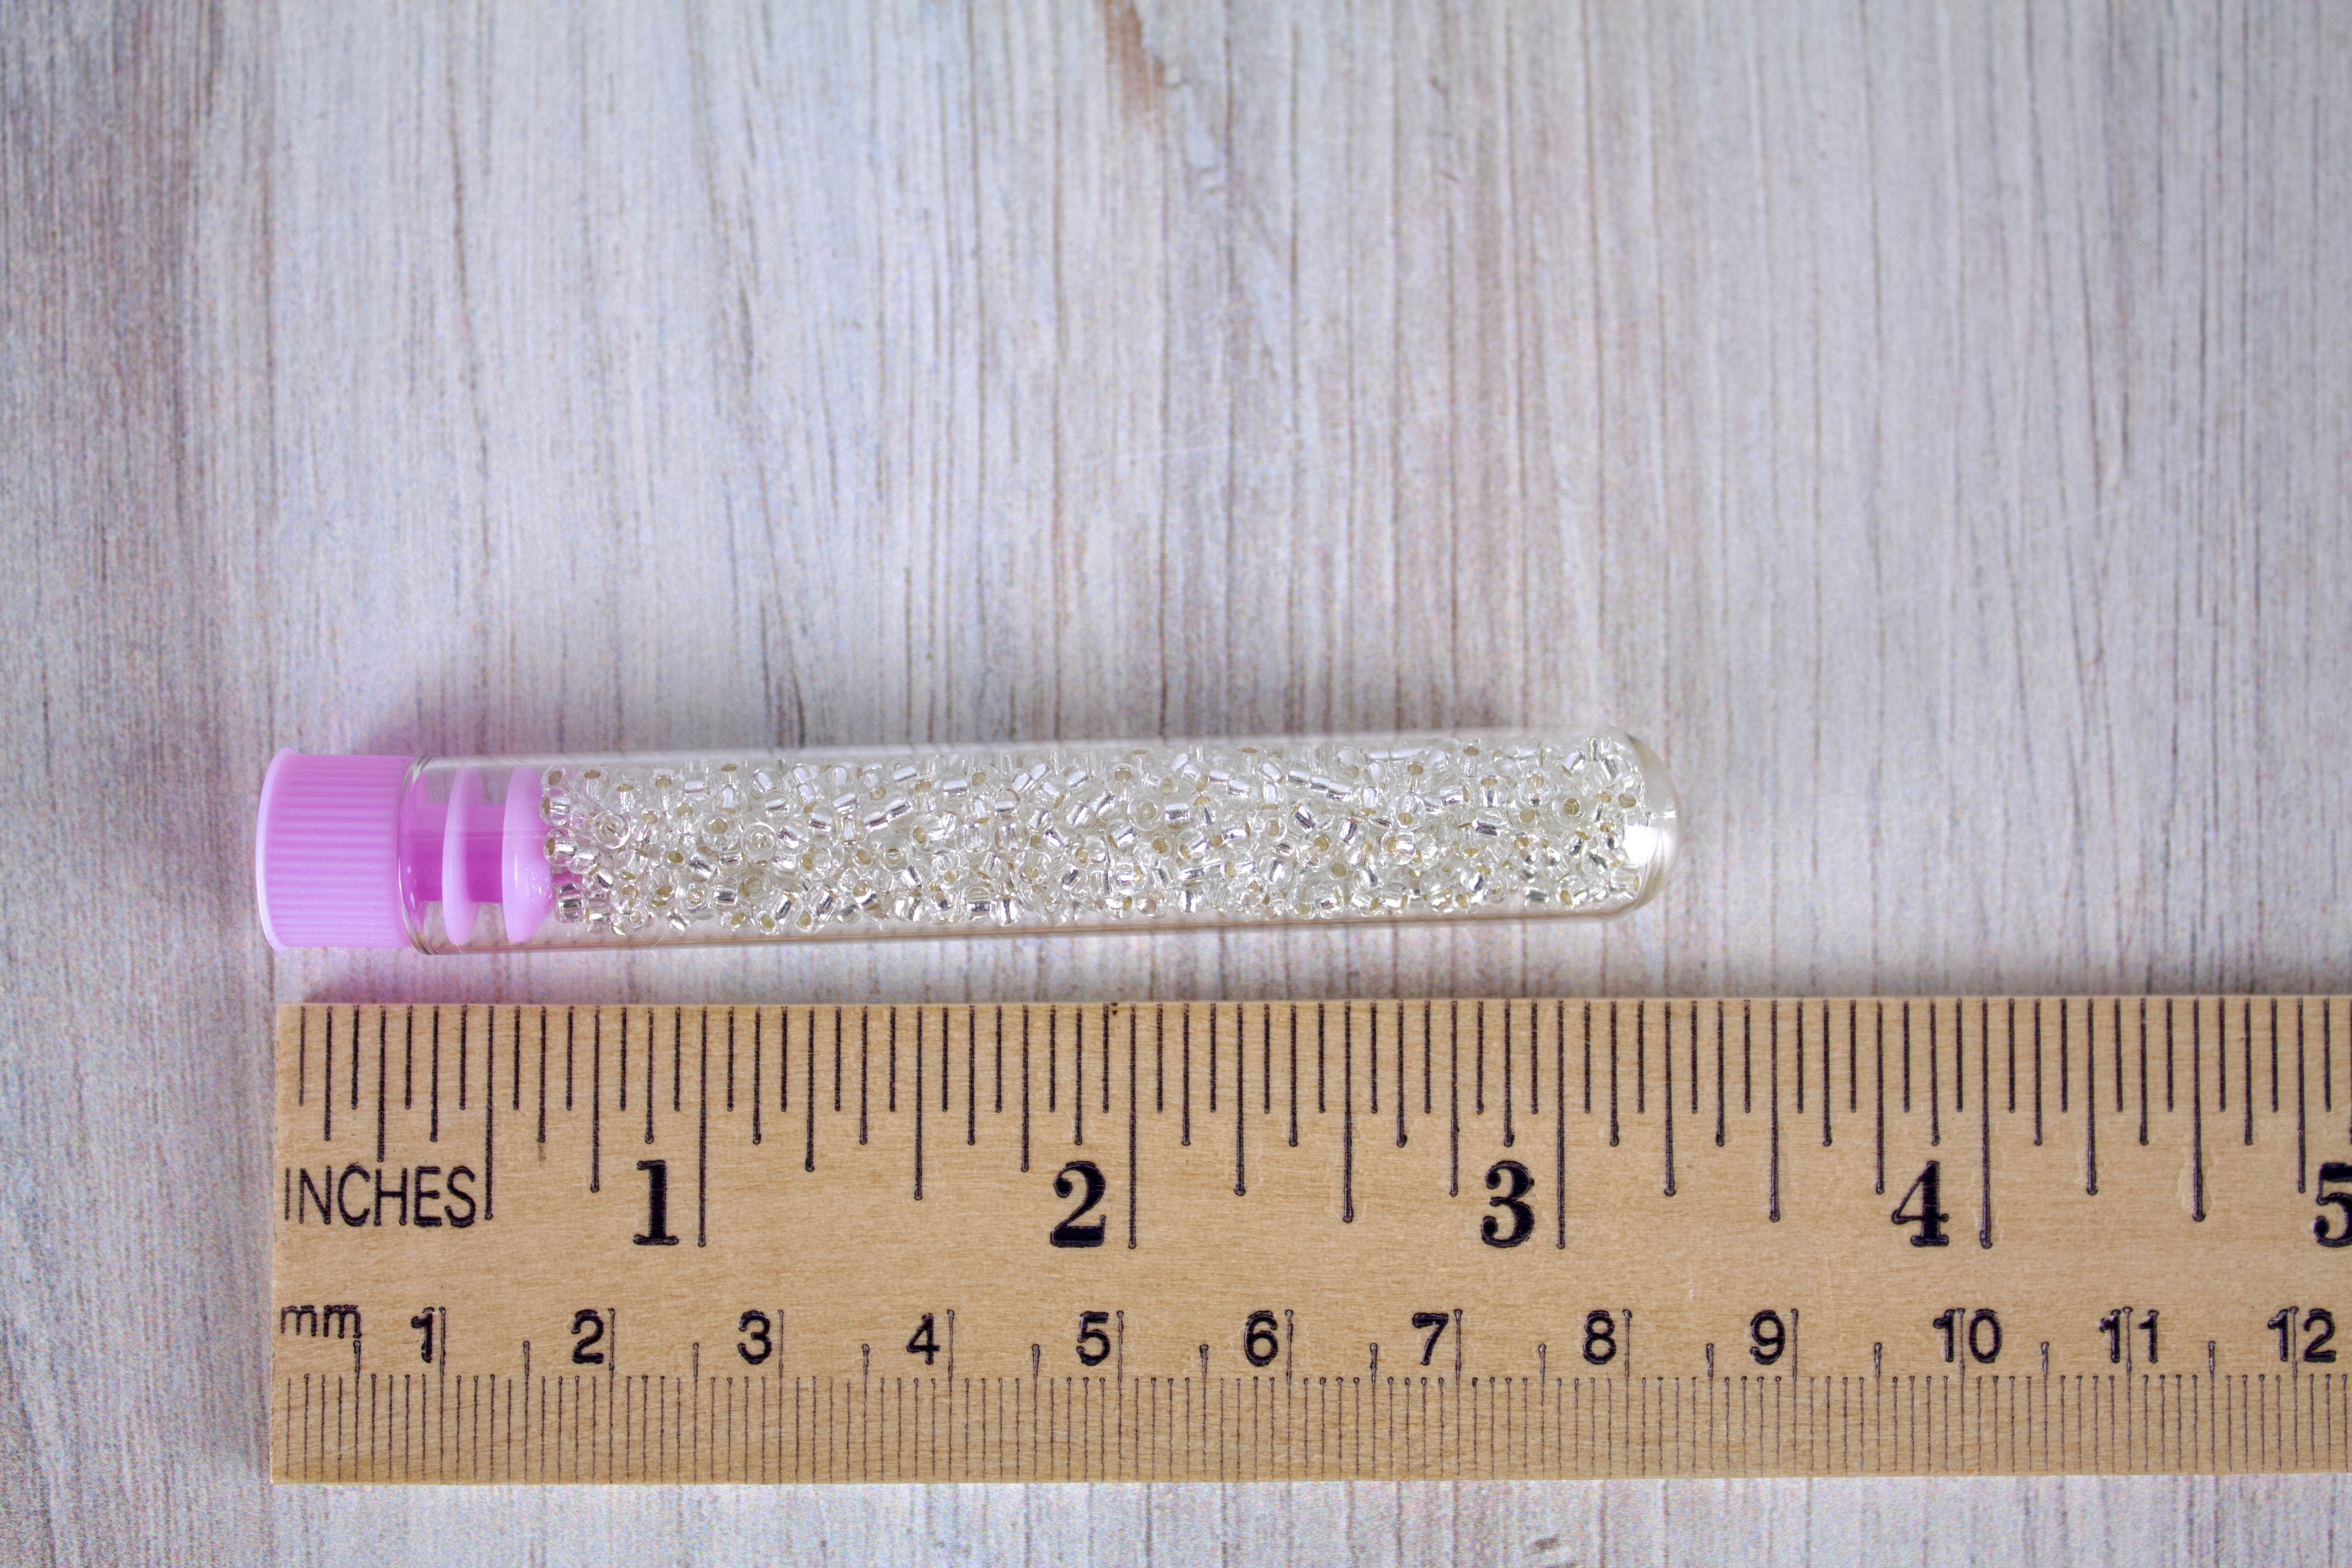 Silver Lined Crystal Miyuki Seed Beads size 11